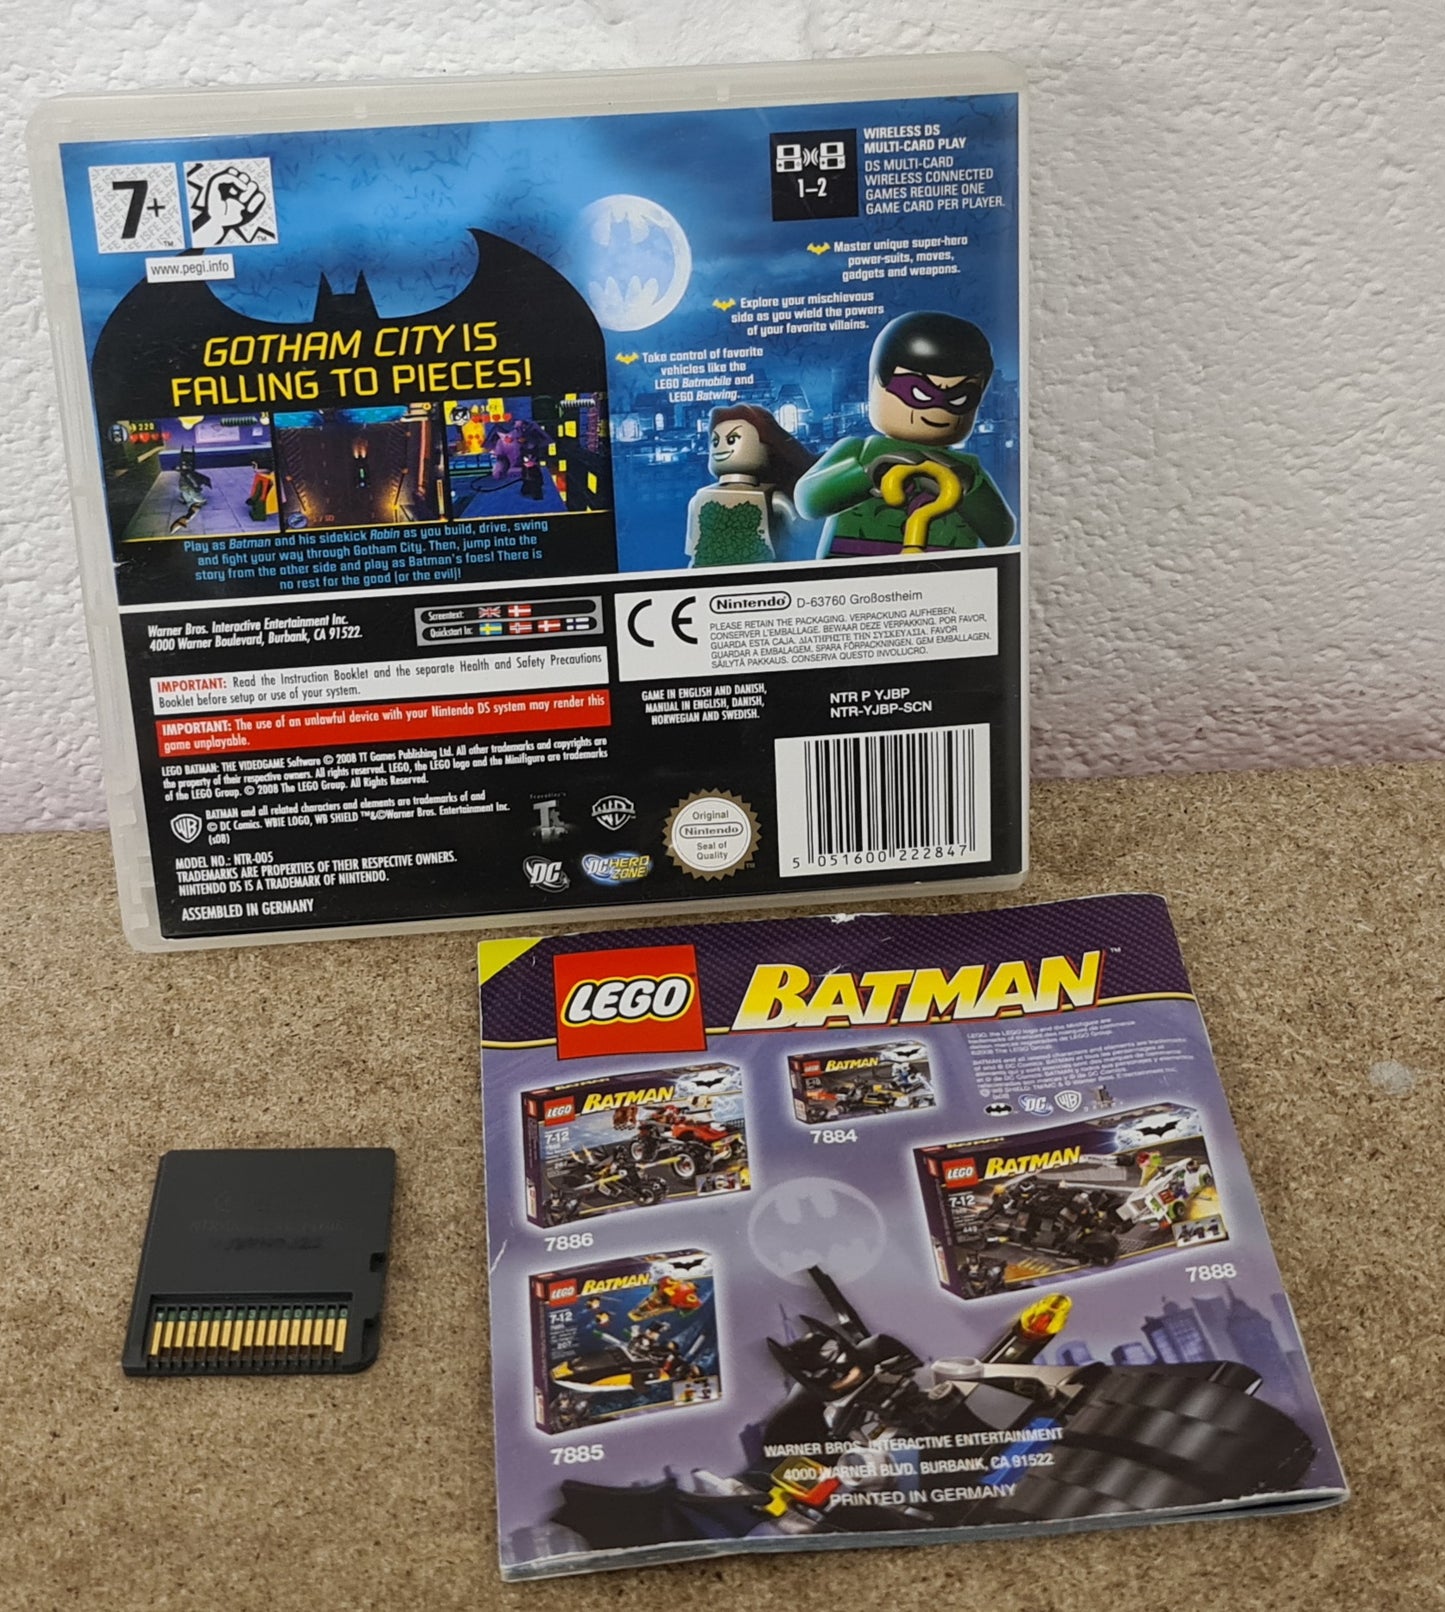 Lego Batman Nintendo DS Game